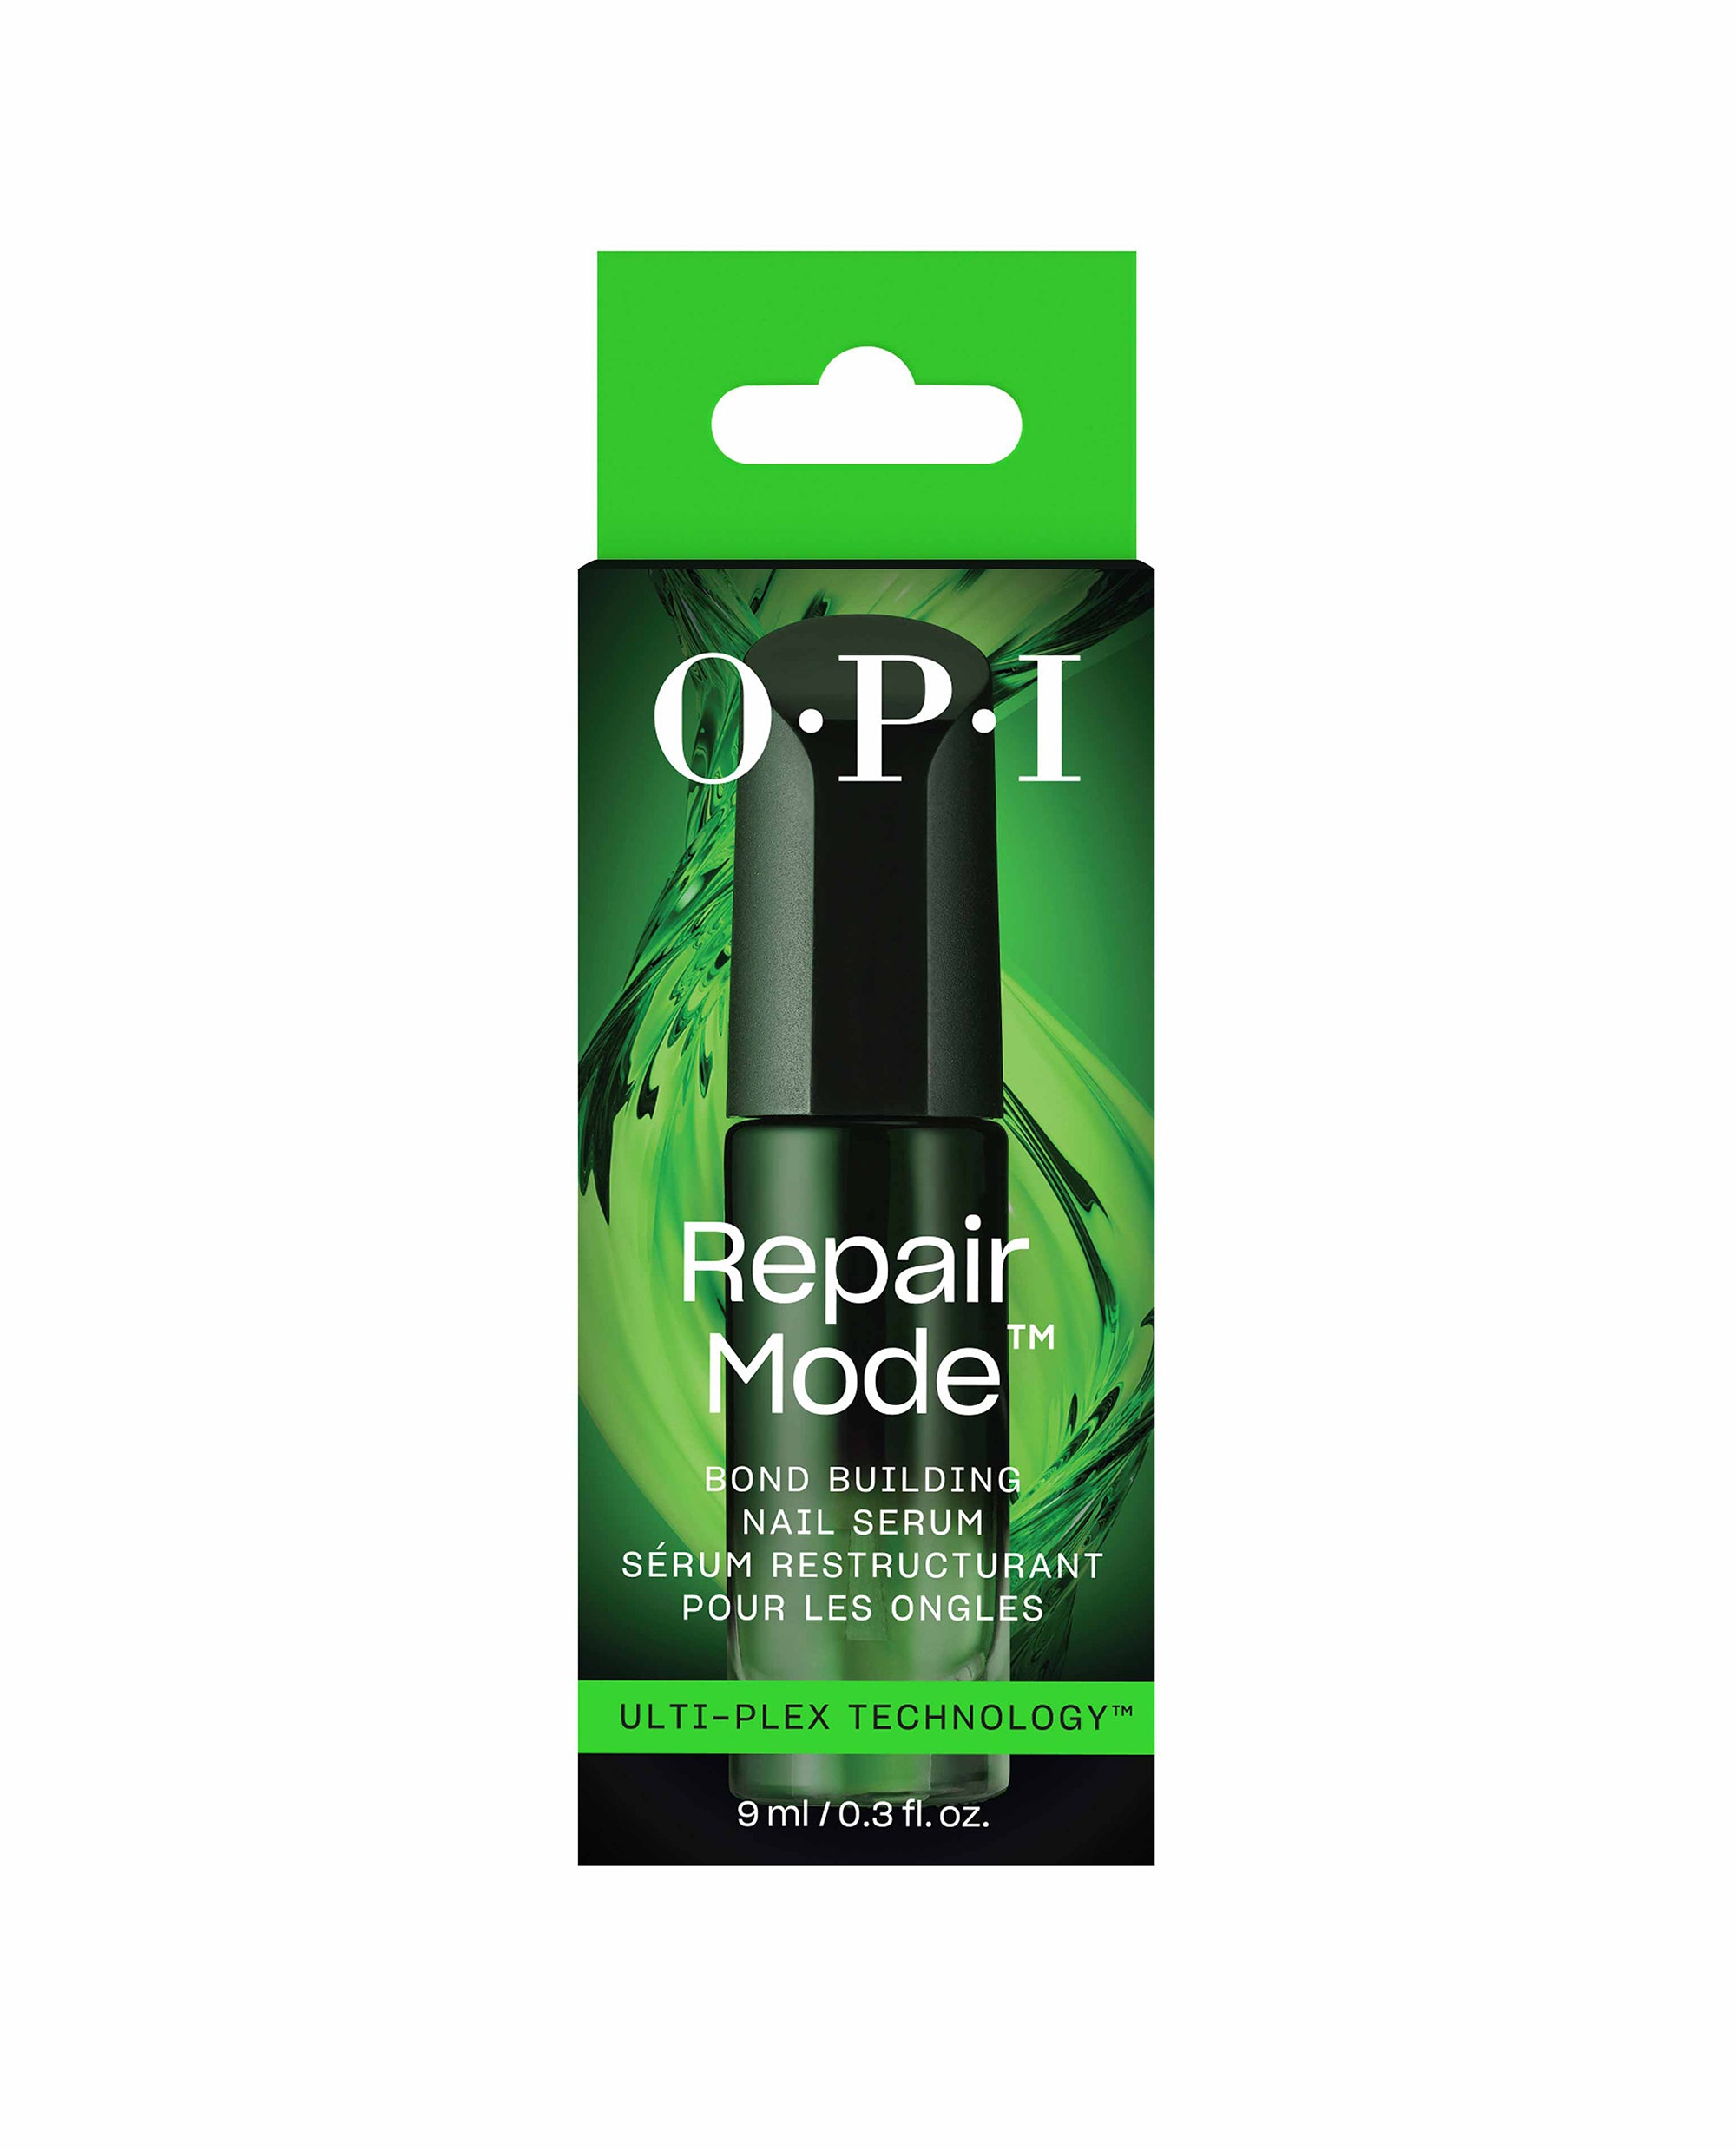 OPI Repair Mode Bond Building Nail Serum Nail Strengthener Carton